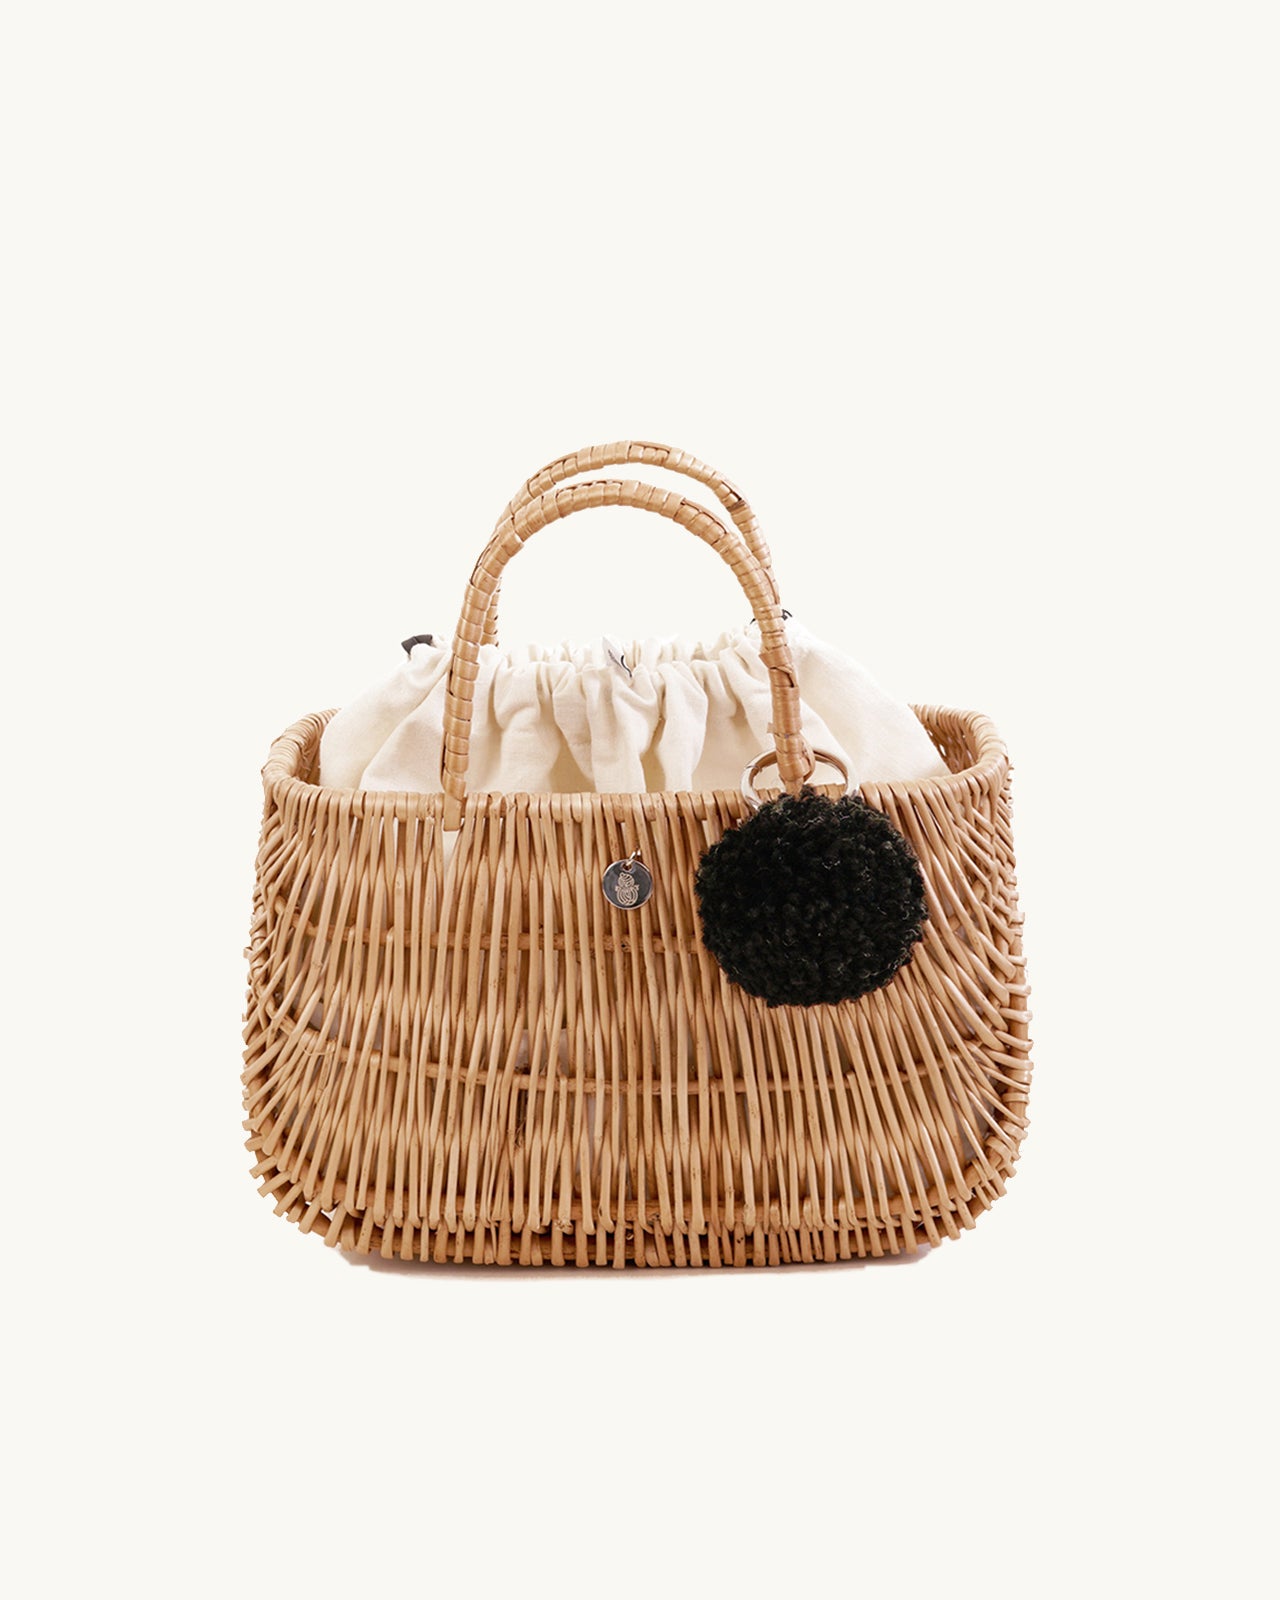 Ladybag Wicker Basket no. 1